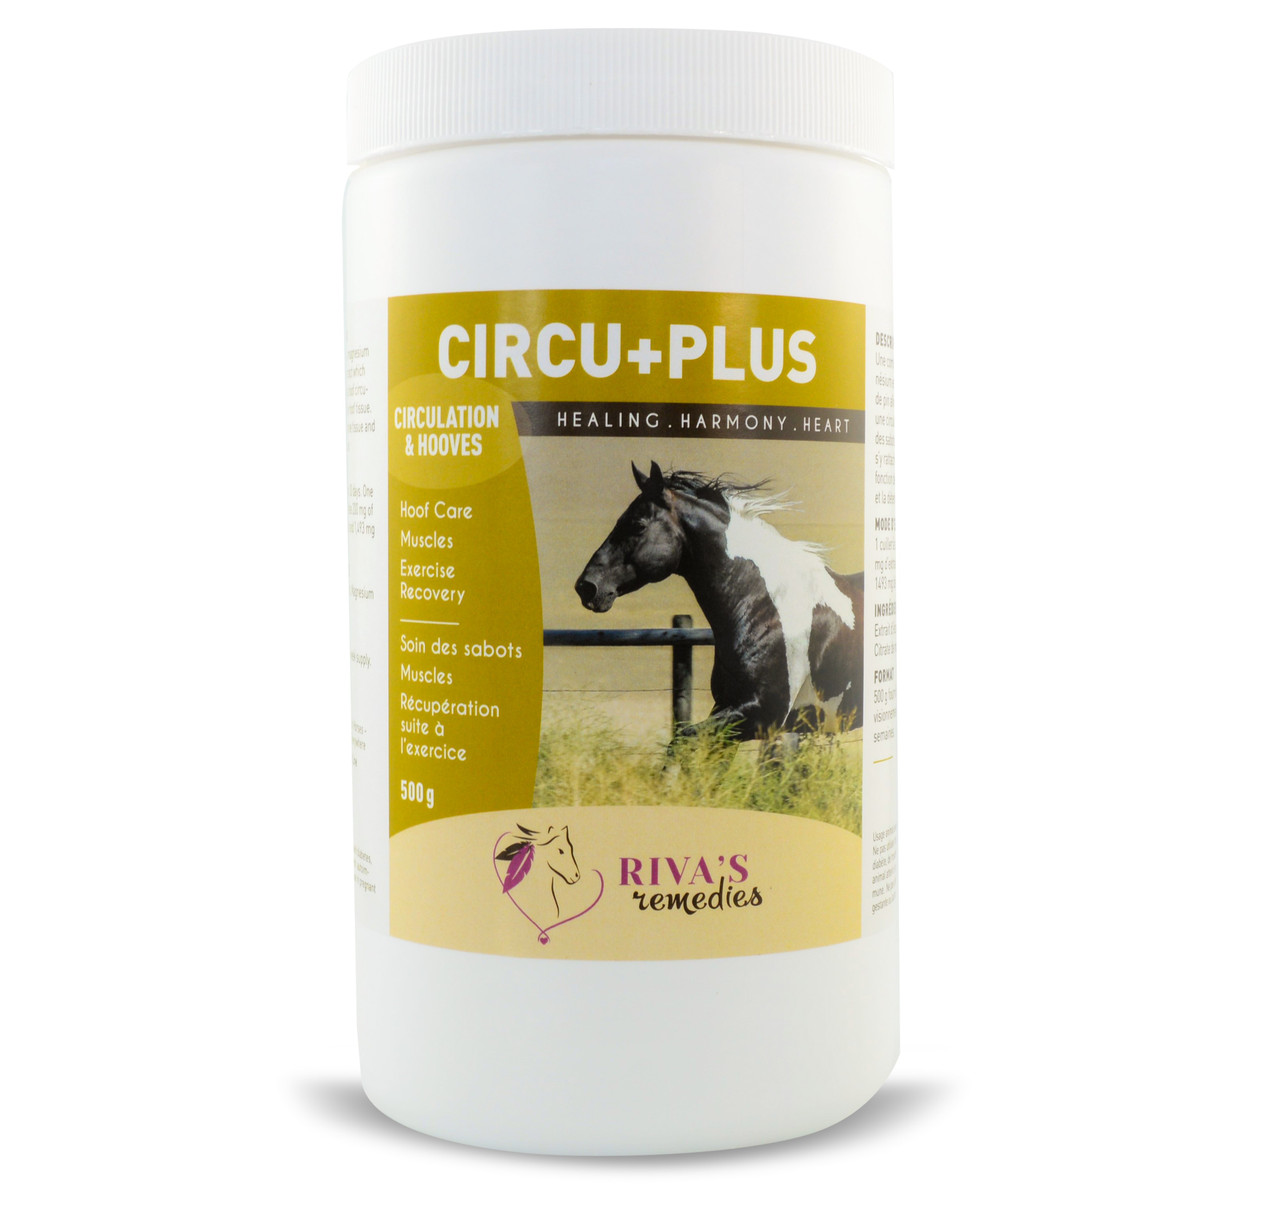 Circu+Plus - Riva's Remedies